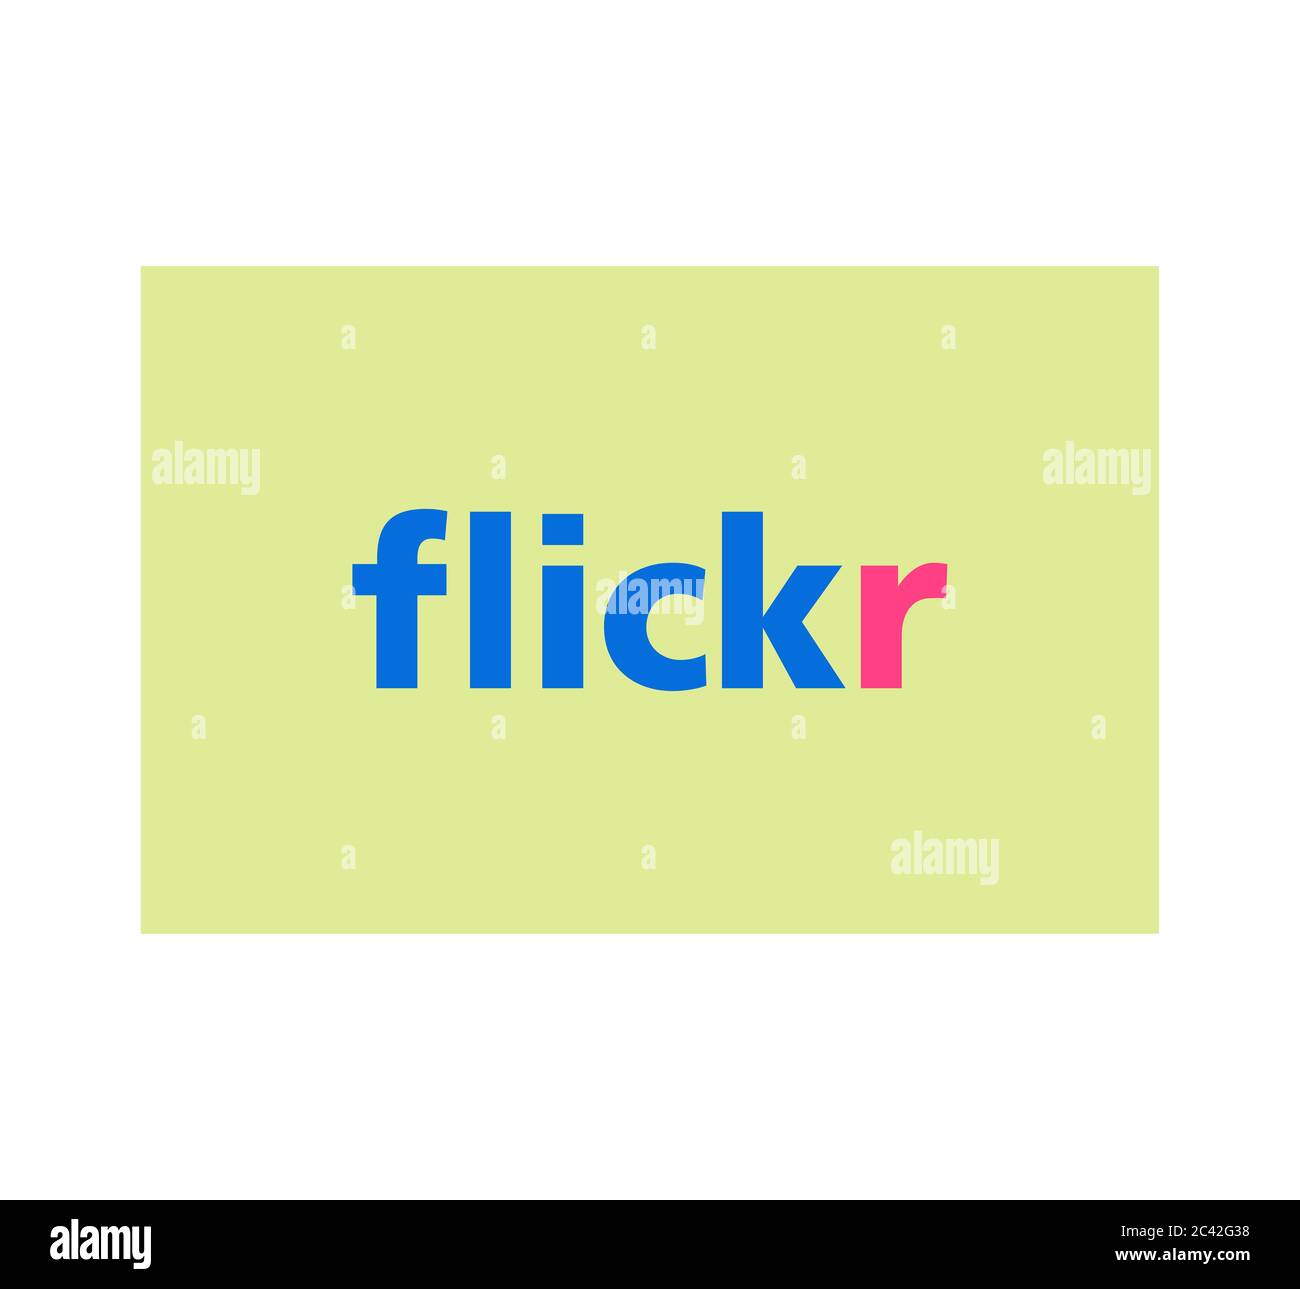 Flickr logo. Flickr is an image hosting video hosting website, photo sharing site for storing user . Kharkiv, Ukraine - June 15, 2020 Stock Photo